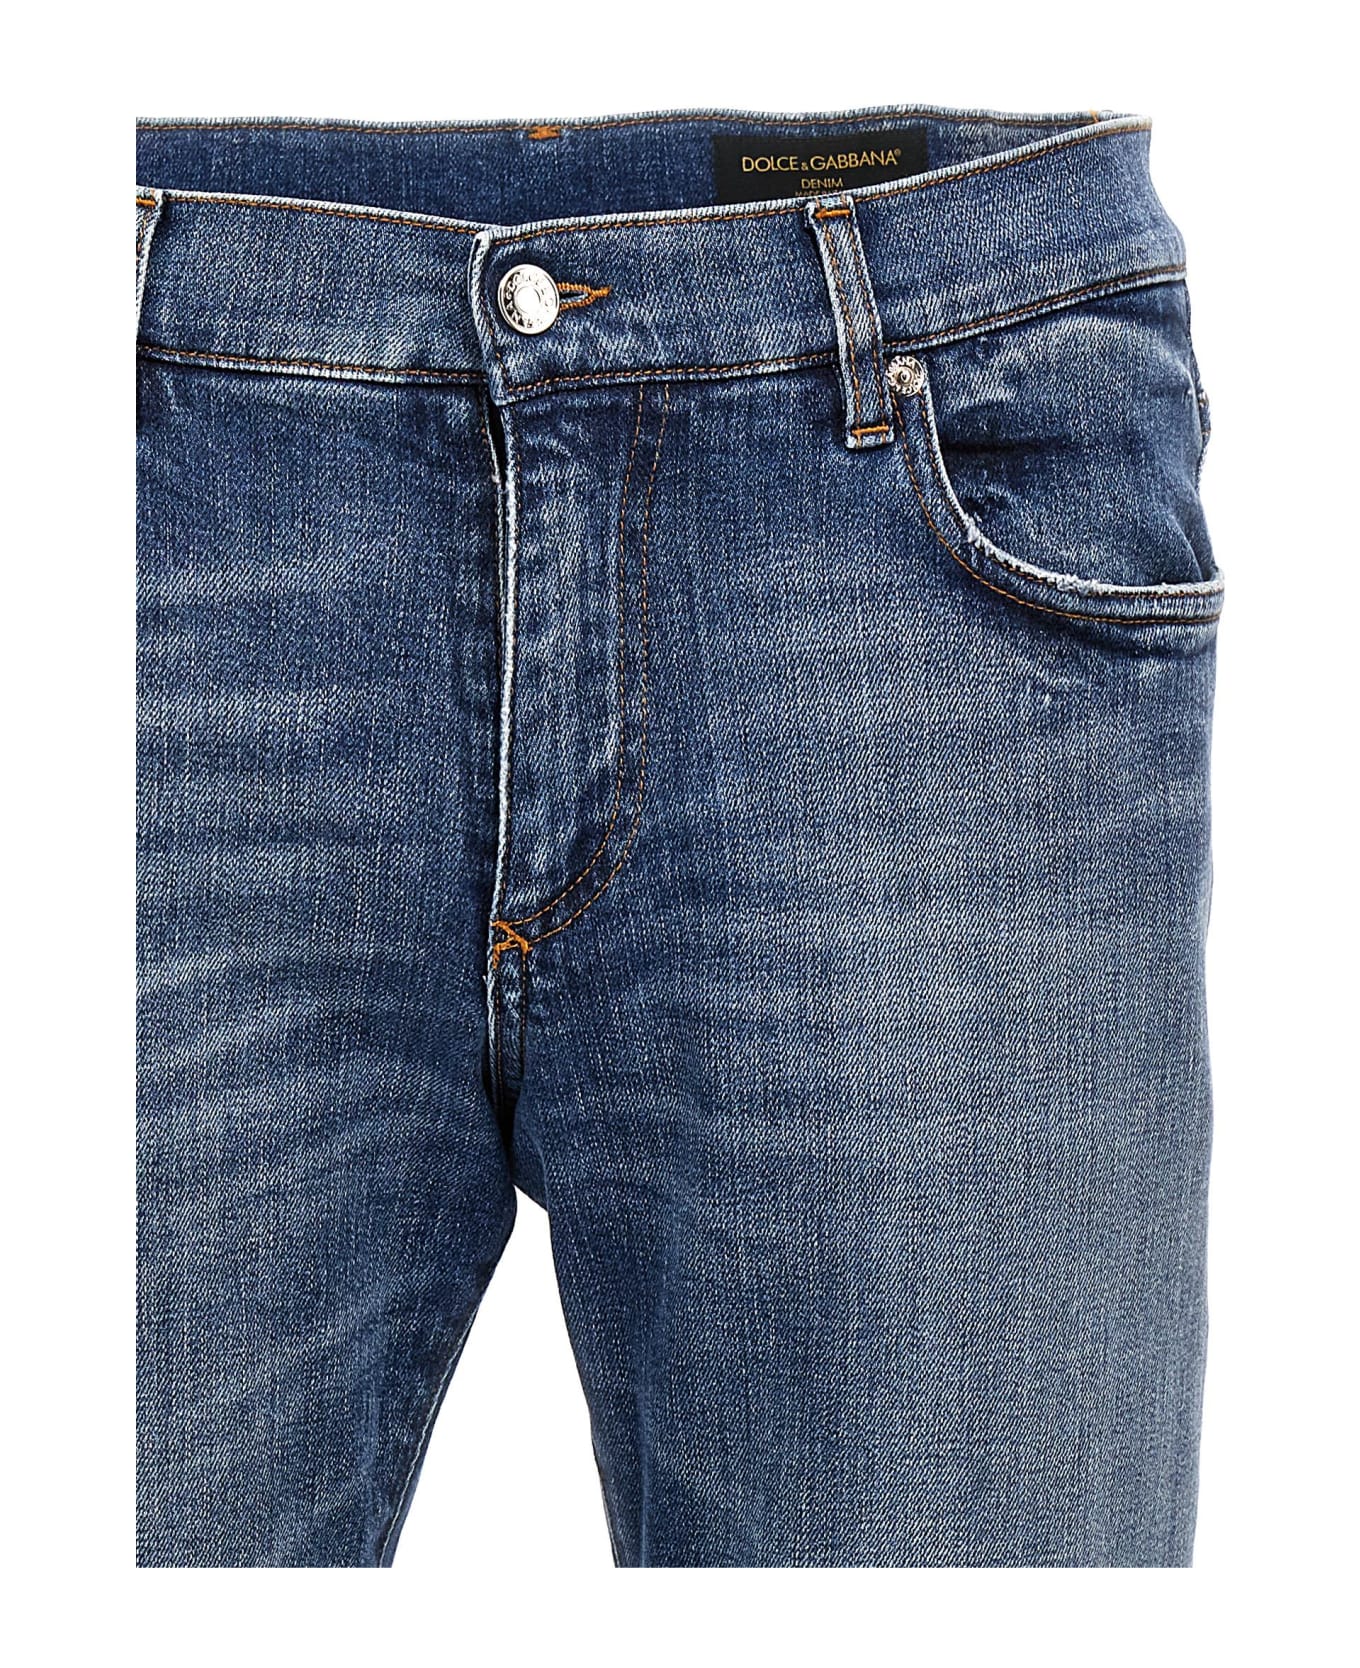 Dolce & Gabbana Classic 5 Pockets Denim Jeans - Denim デニム